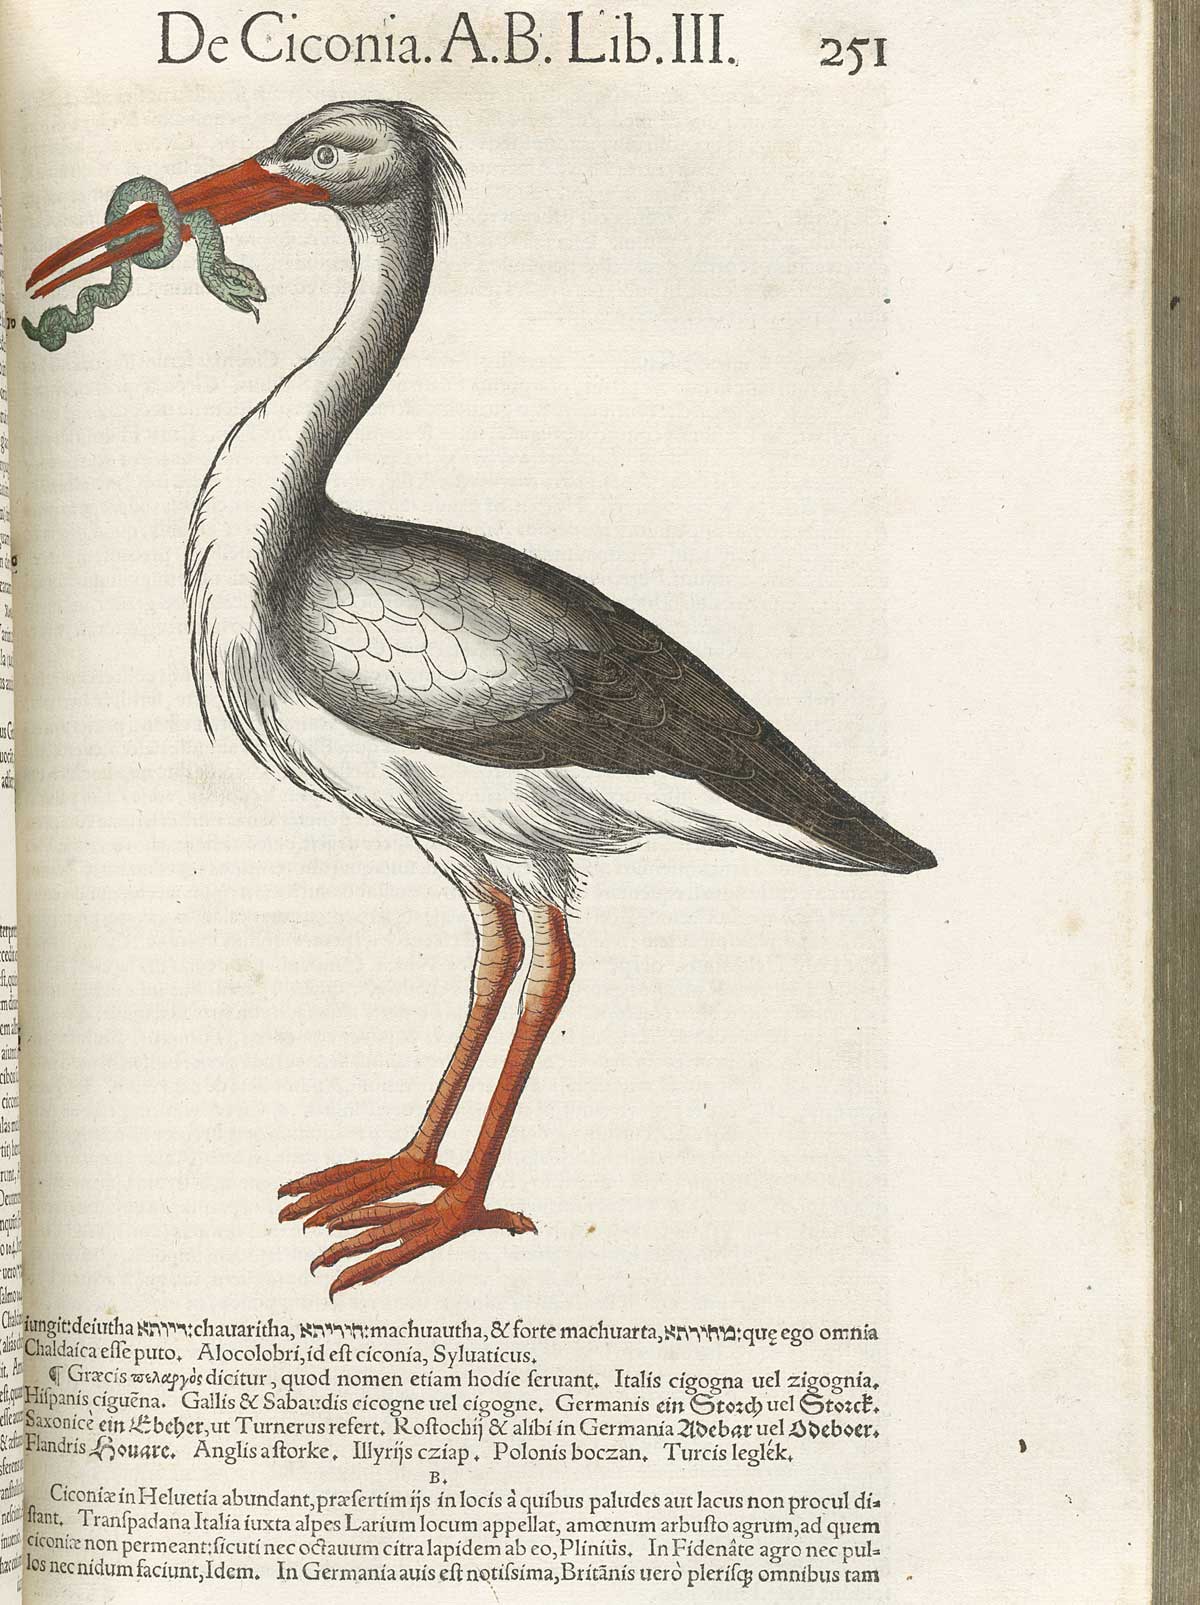 Page 251 from volume 3 of Conrad Gessner's Conradi Gesneri medici Tigurini Historiae animalium, featuring the colored woodcut of de ciconia or a stork.